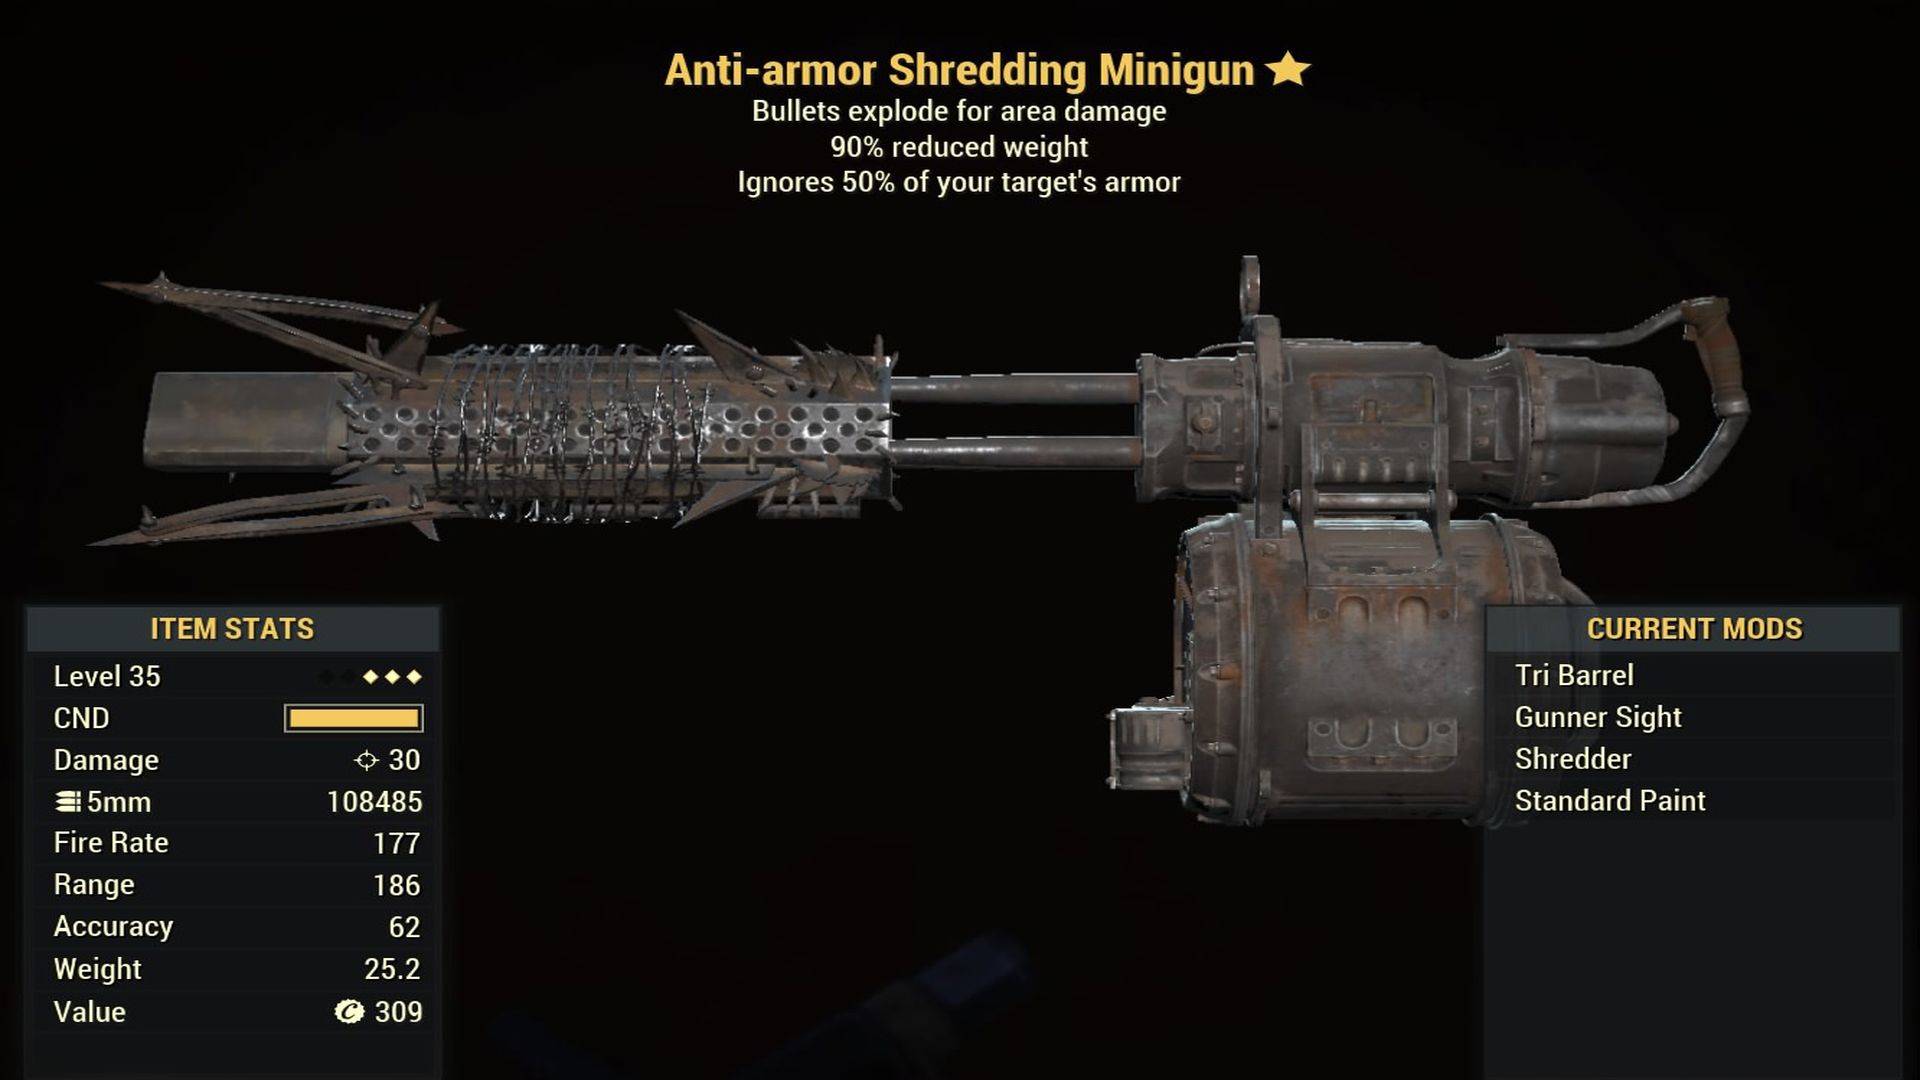 Fallout 76 Anti-armor Shredding Minigun - Level 35